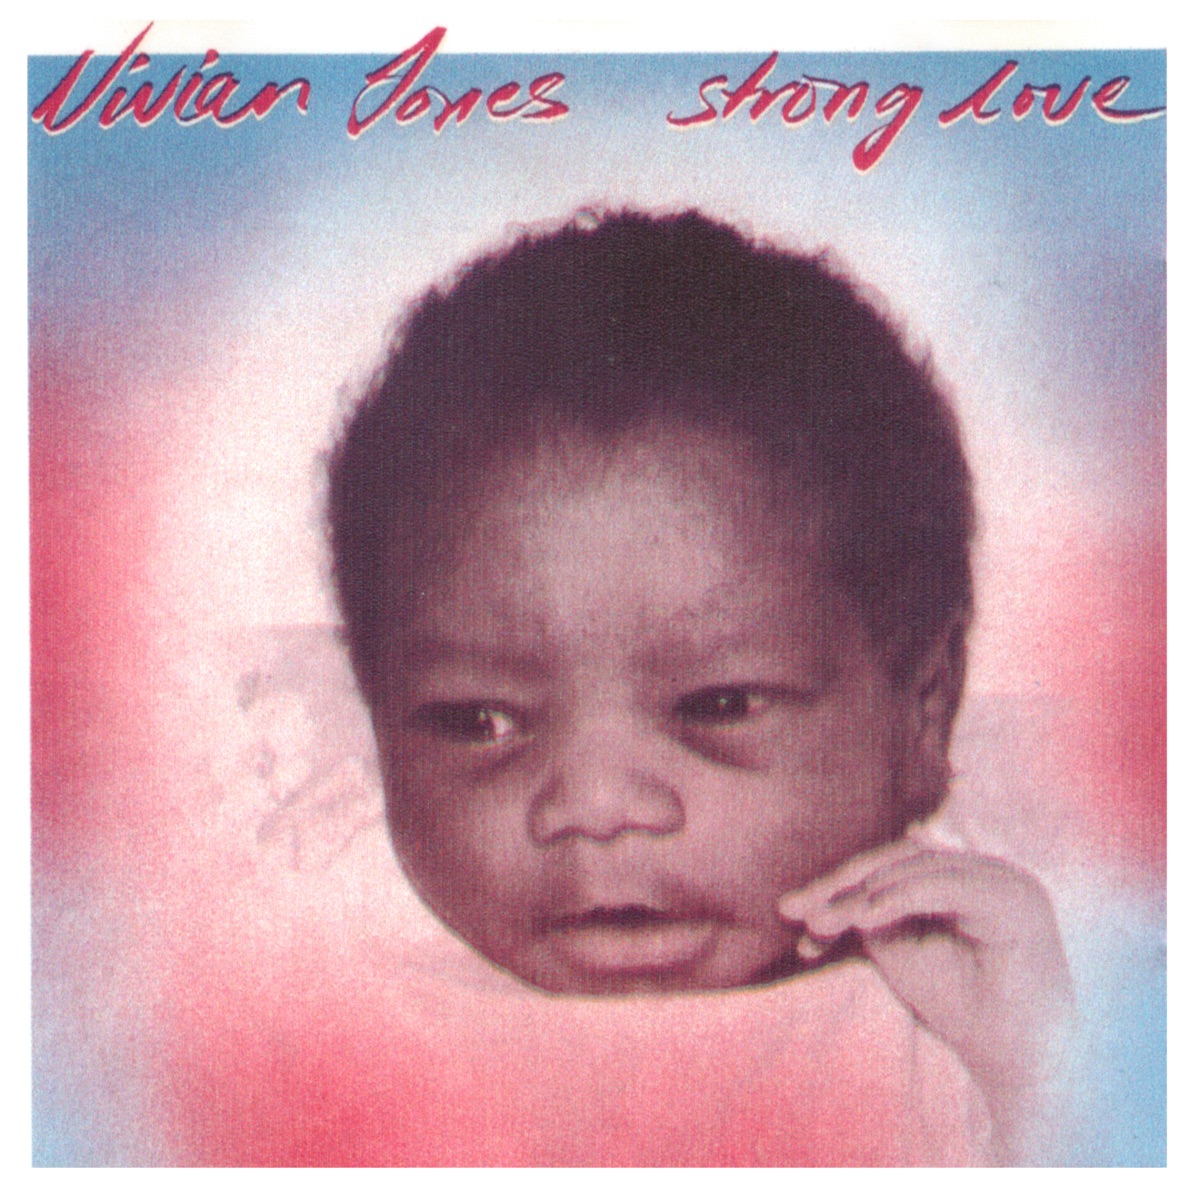 „Strong Love“ von <b>Vivian Jones</b> in iTunes - 1200x1200sr